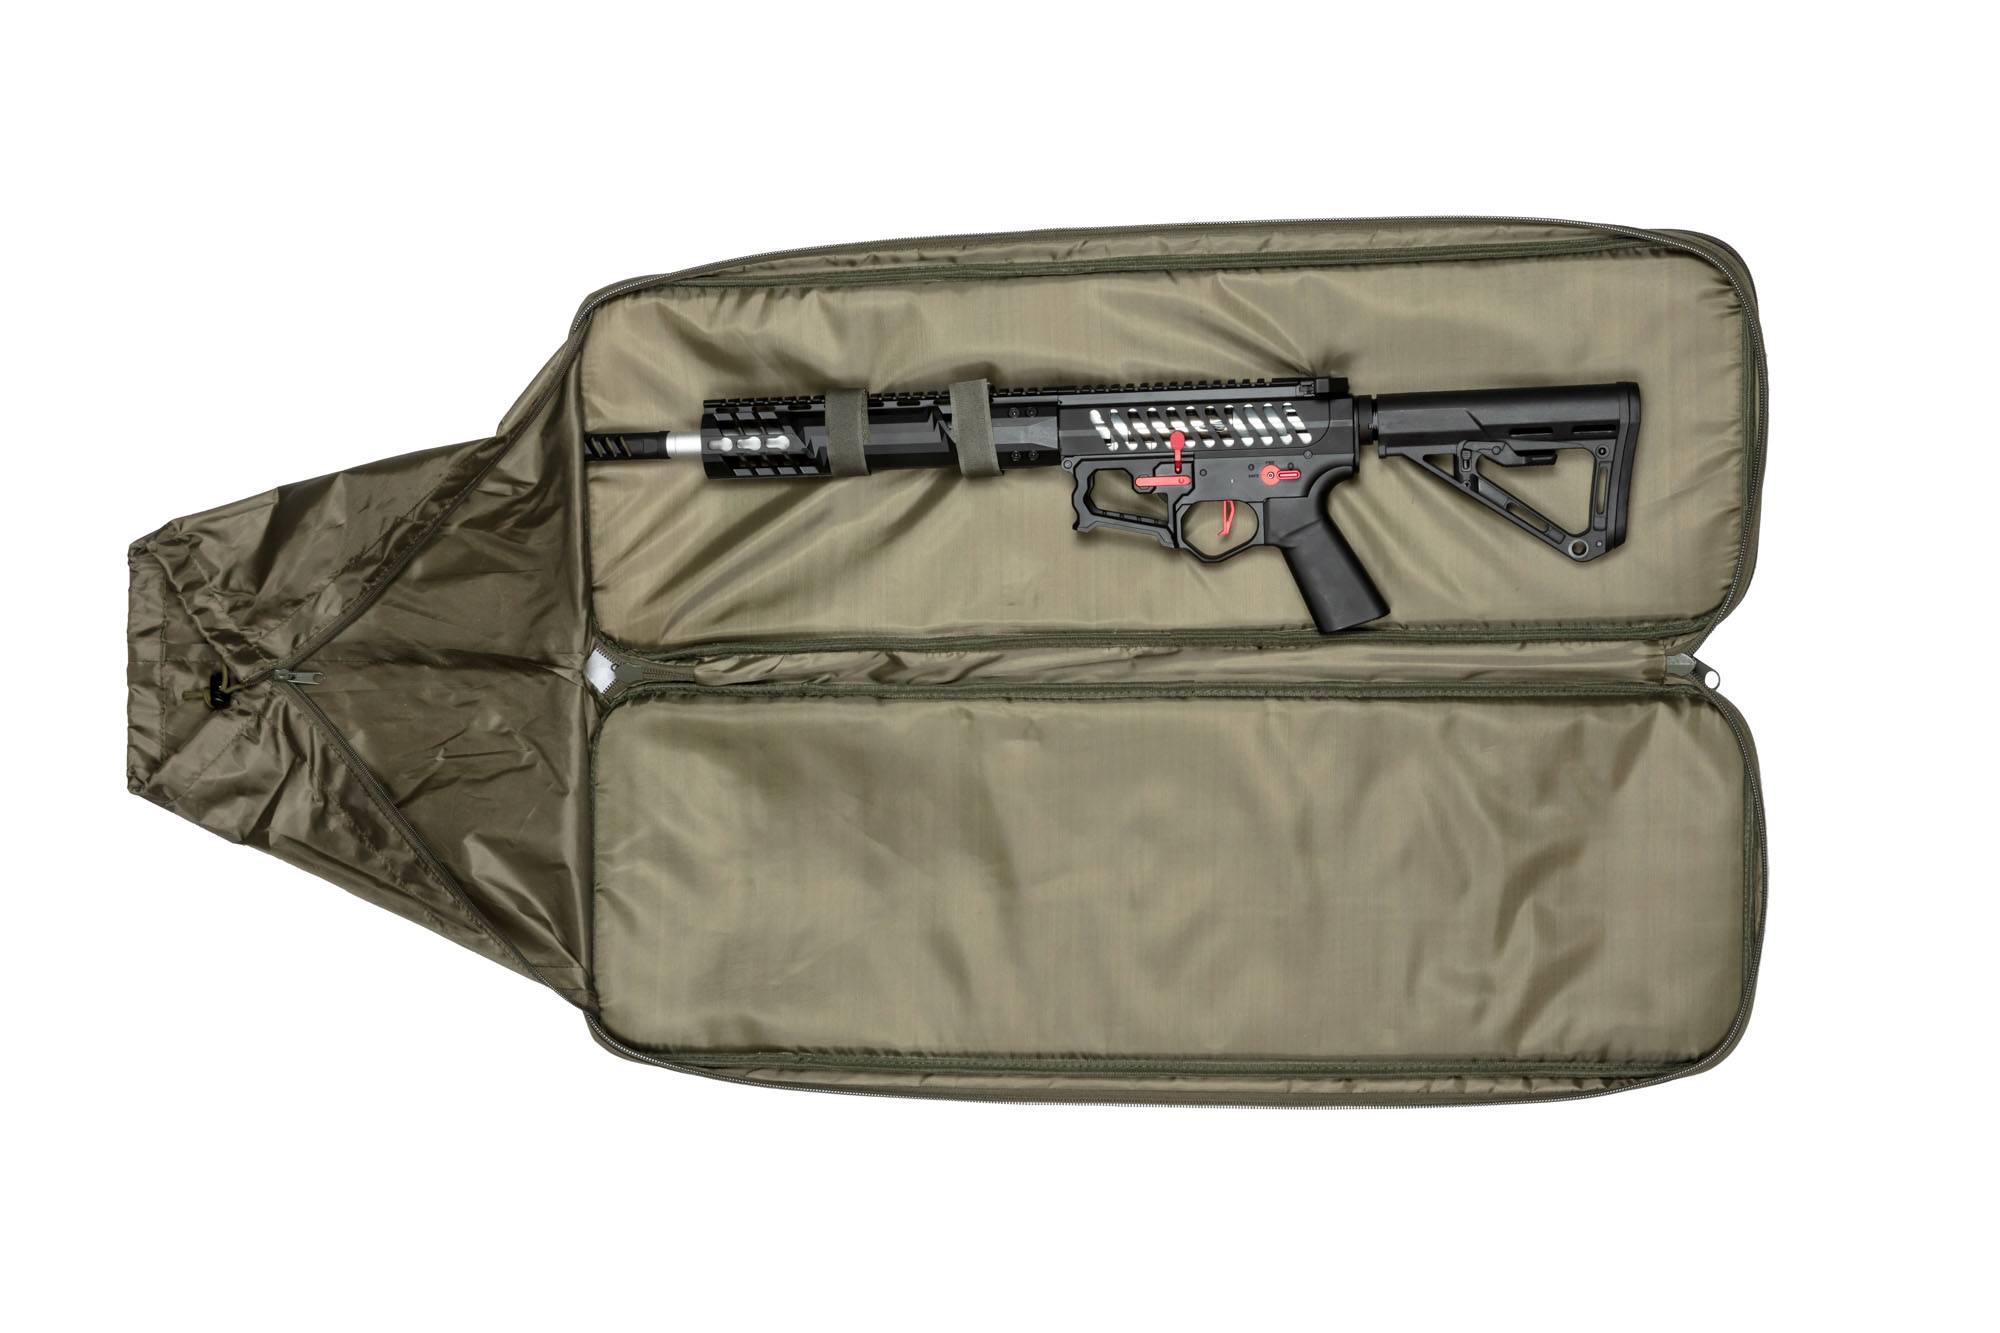 Specna Arms Waffentasche V2 - 84cm - Oliv